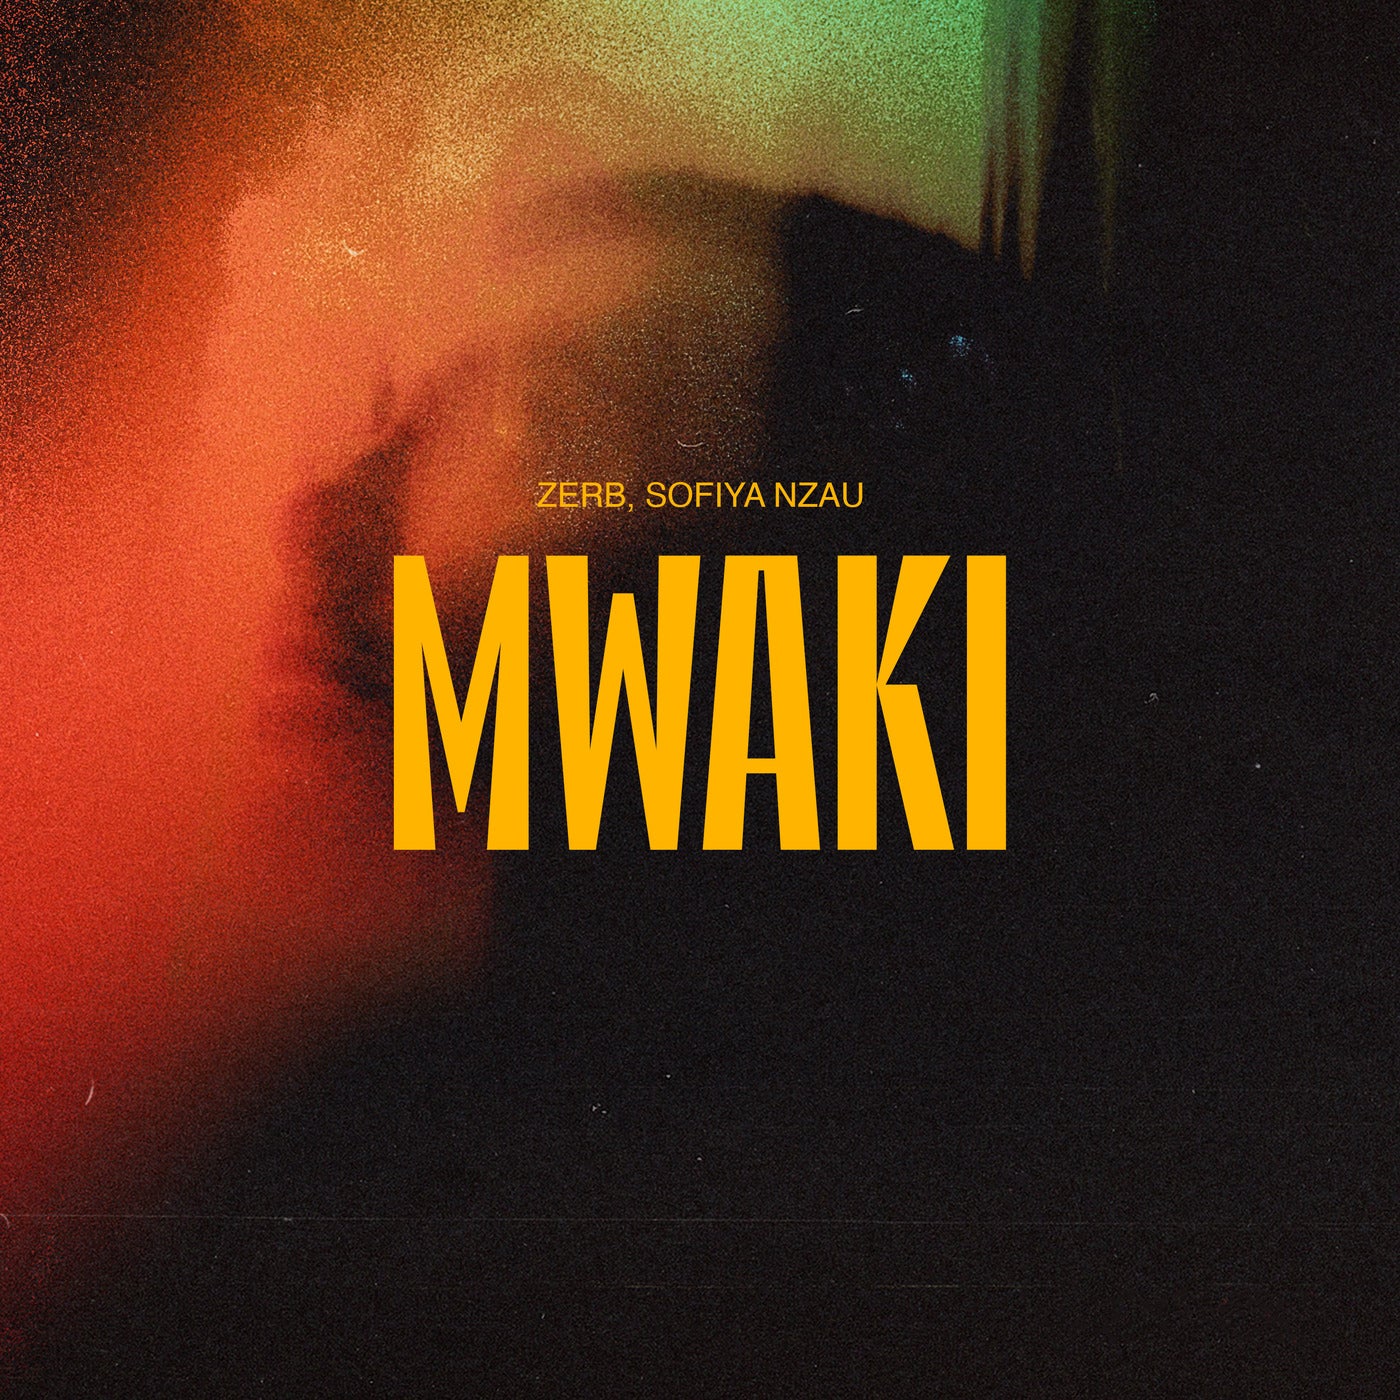 Mwaki - Extended Mix